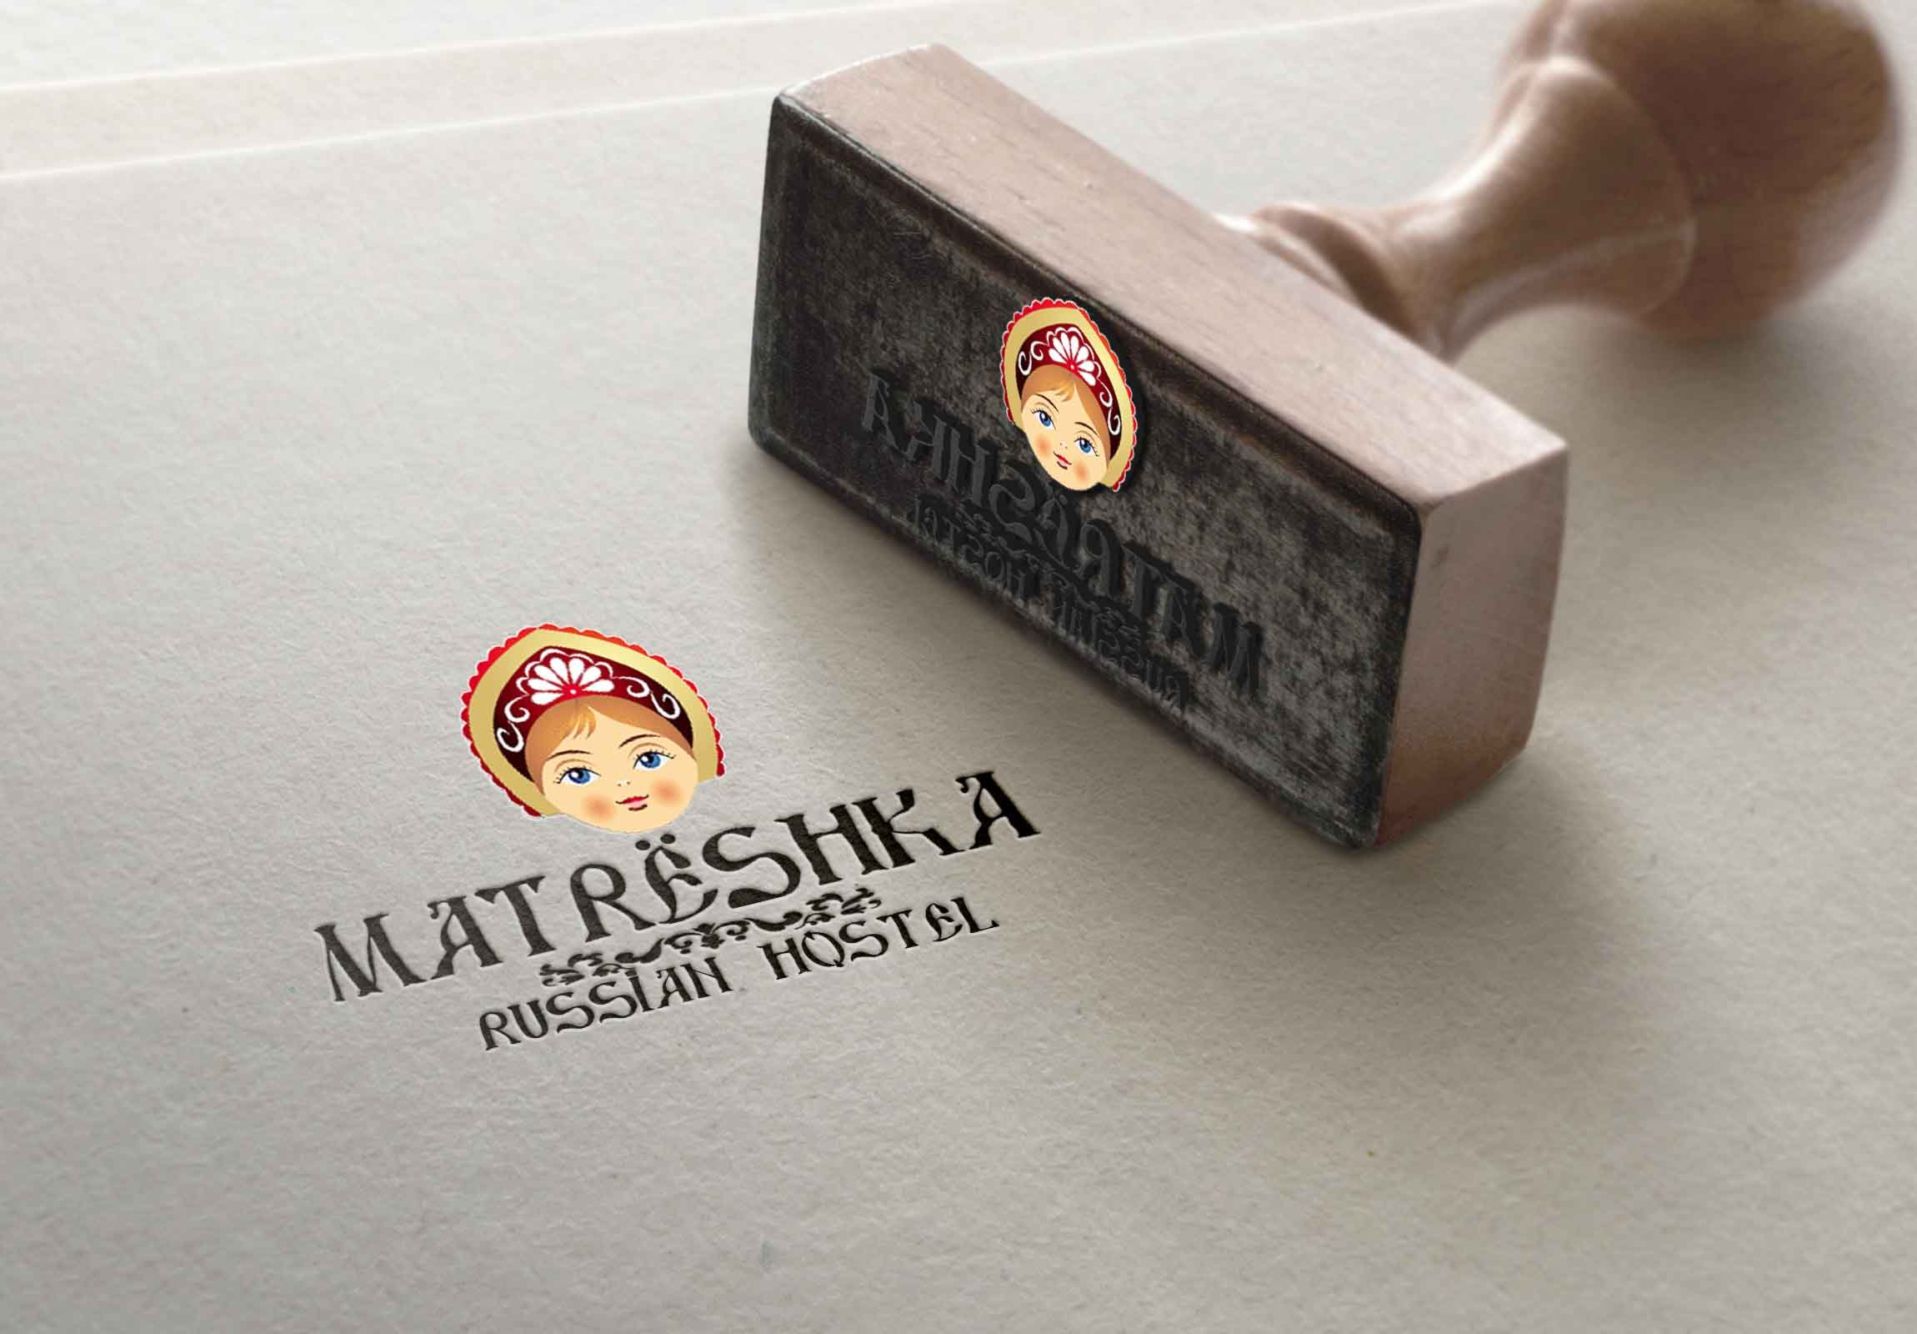 Логотип MATRESHKA Russian hostel - дизайнер Askar24